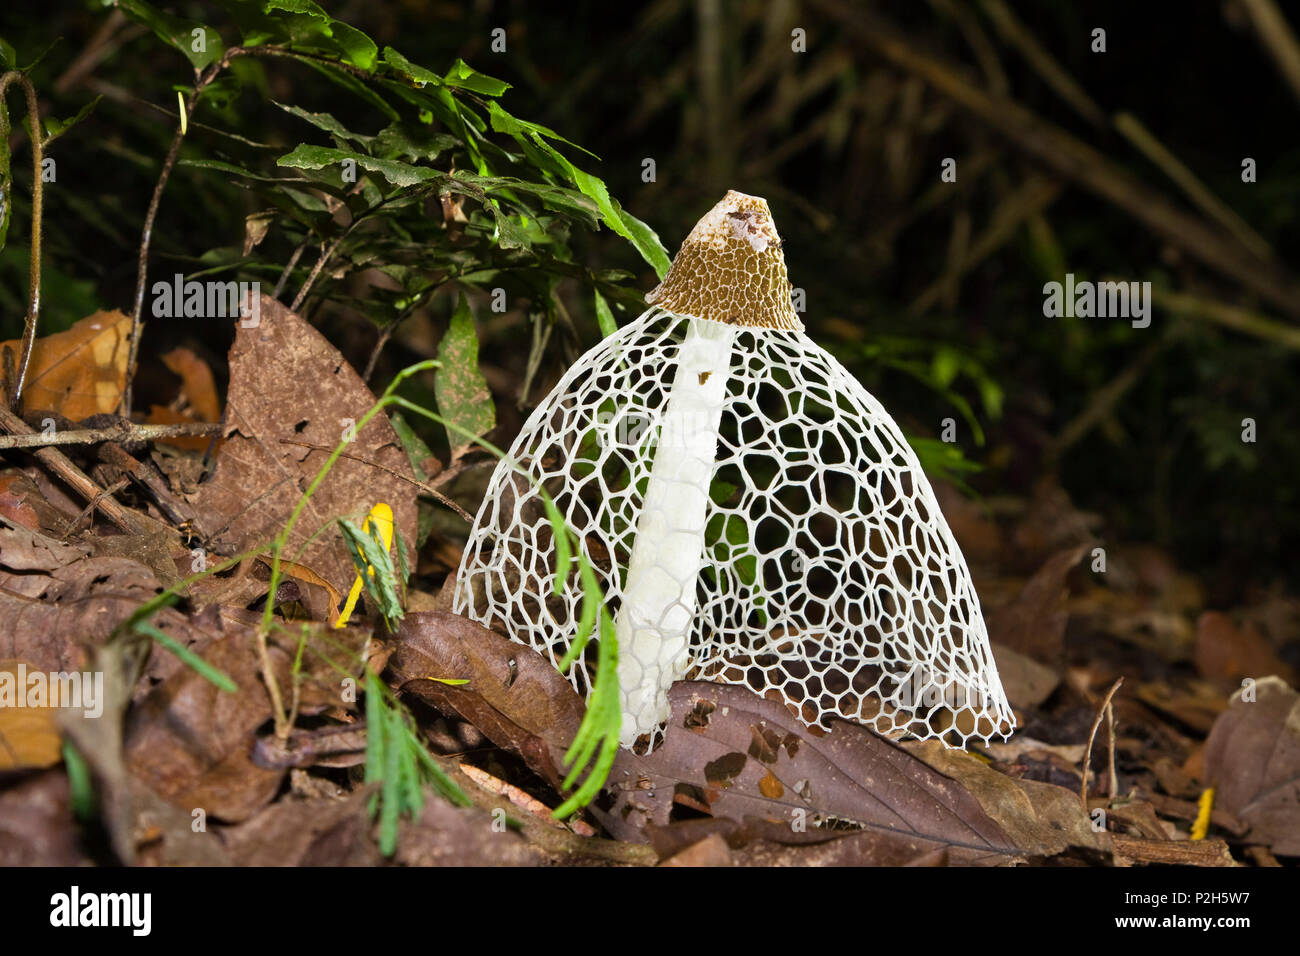 Pilz, Dictyphora indusiata, Regenwald, Tambopata Reserve, Peru, Südamerika  Stockfotografie - Alamy